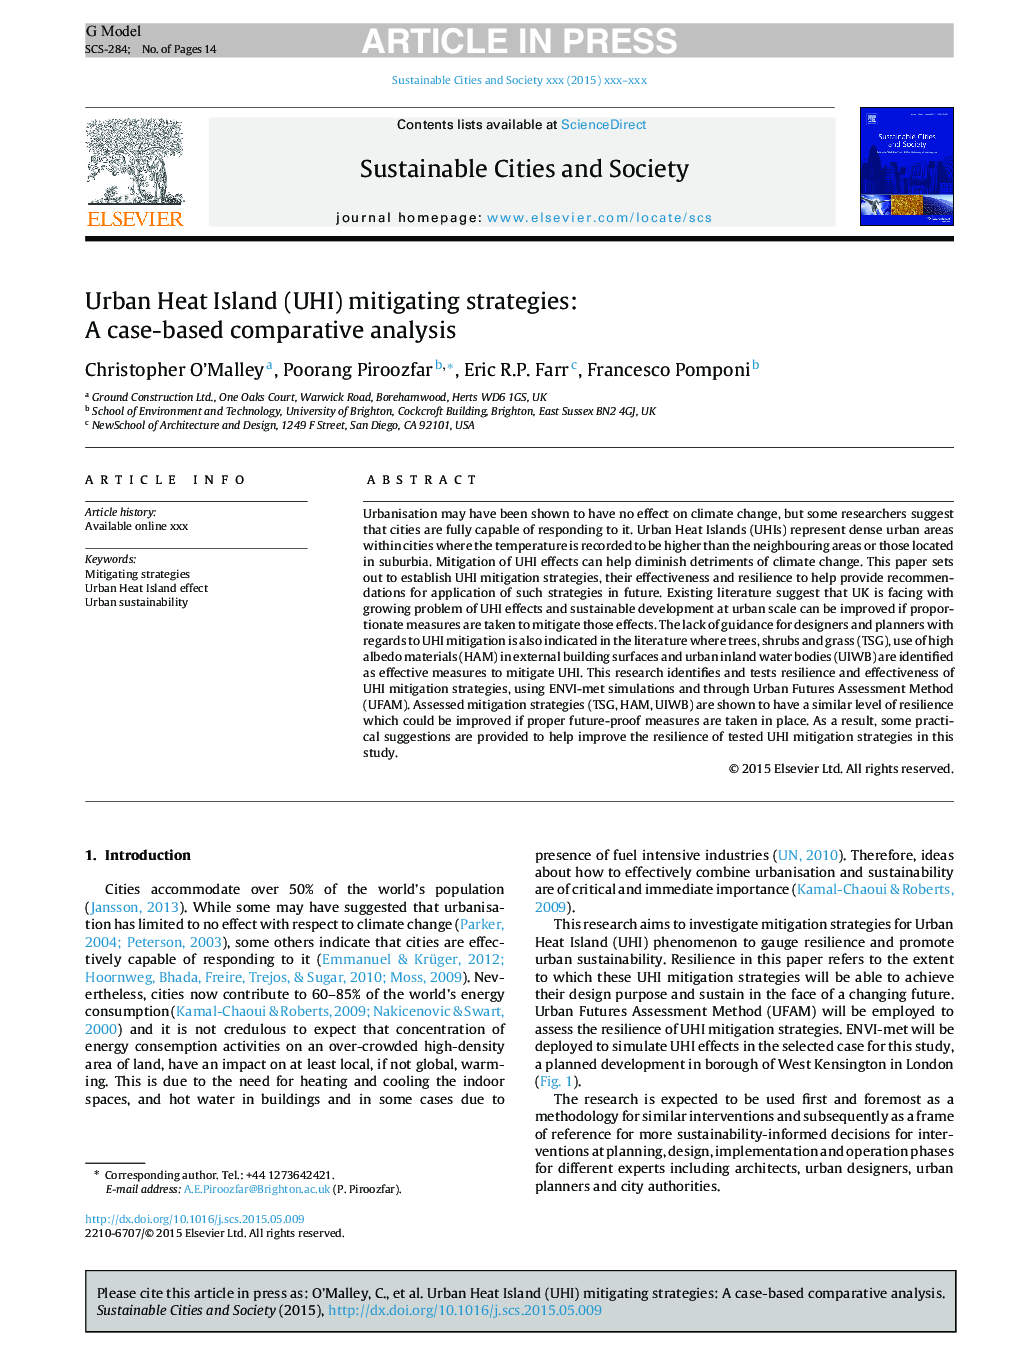 Urban Heat Island (UHI) mitigating strategies: A case-based comparative analysis